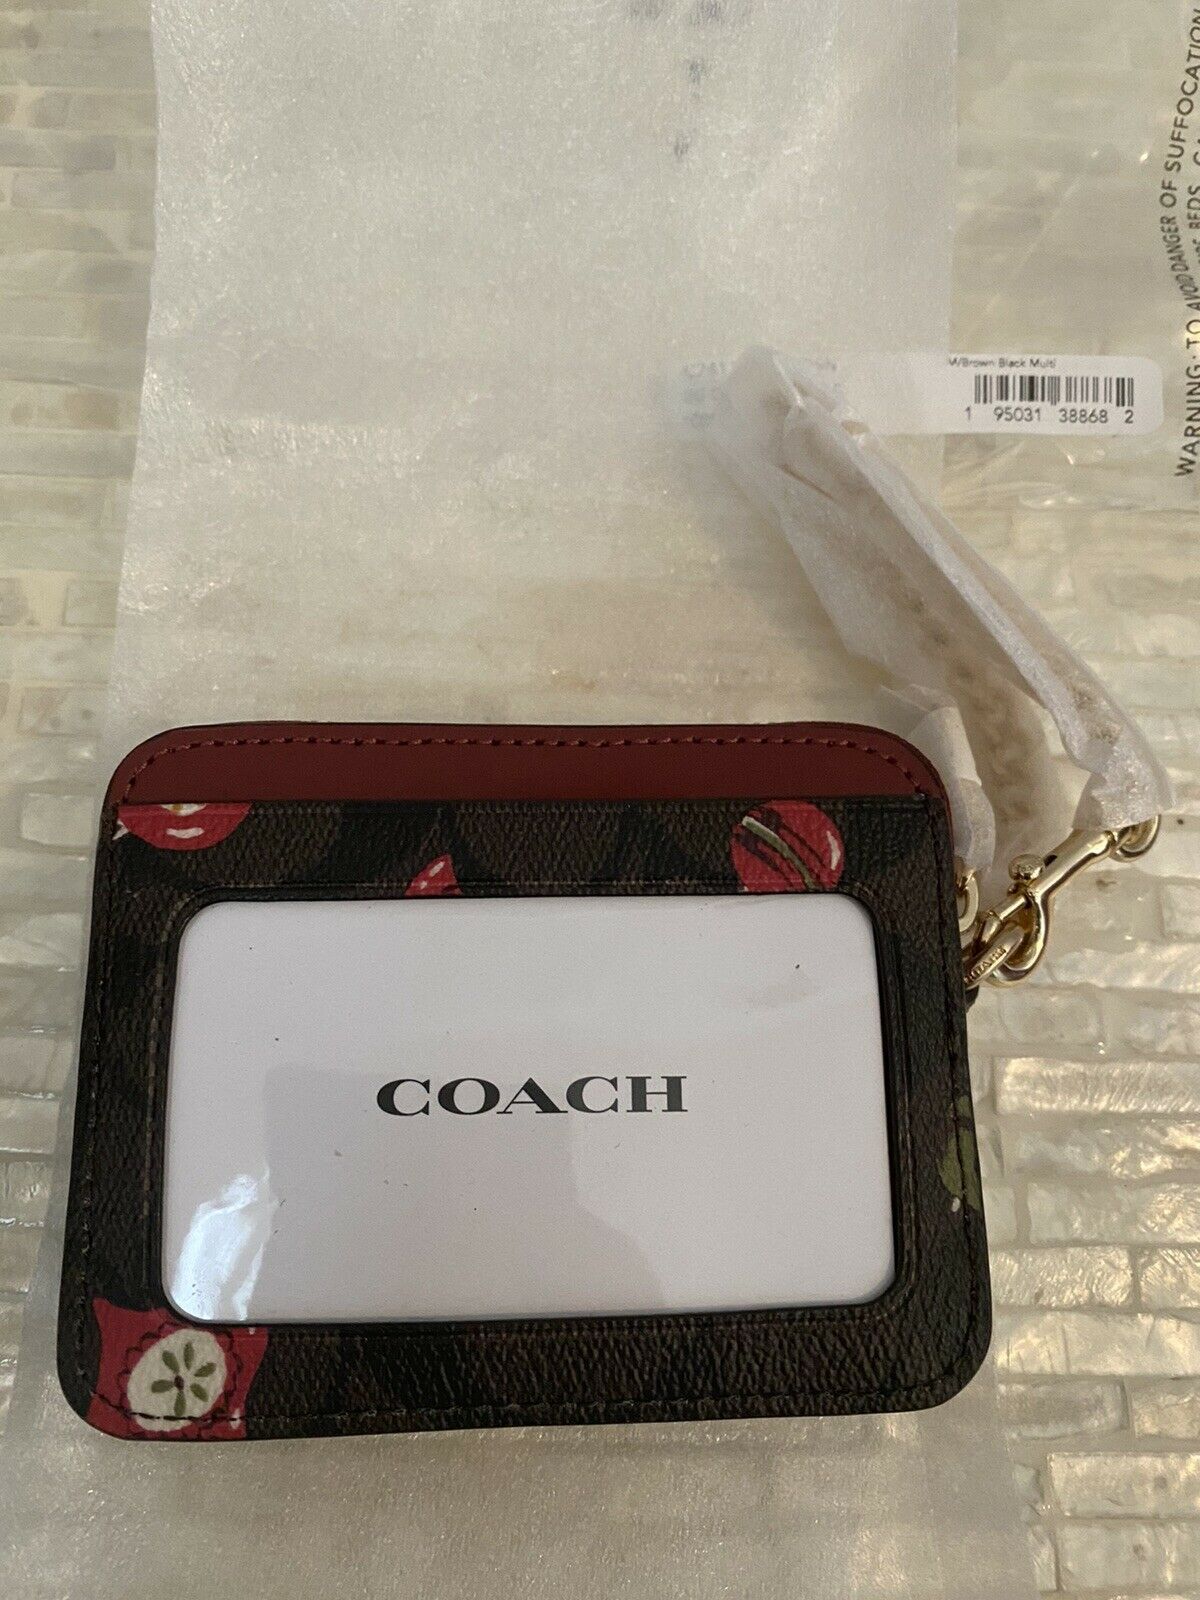 NWT Coach POPPY Crossbody Bag & Card Case Sig w/Jumbo Floral Print KHAKI  MULTI